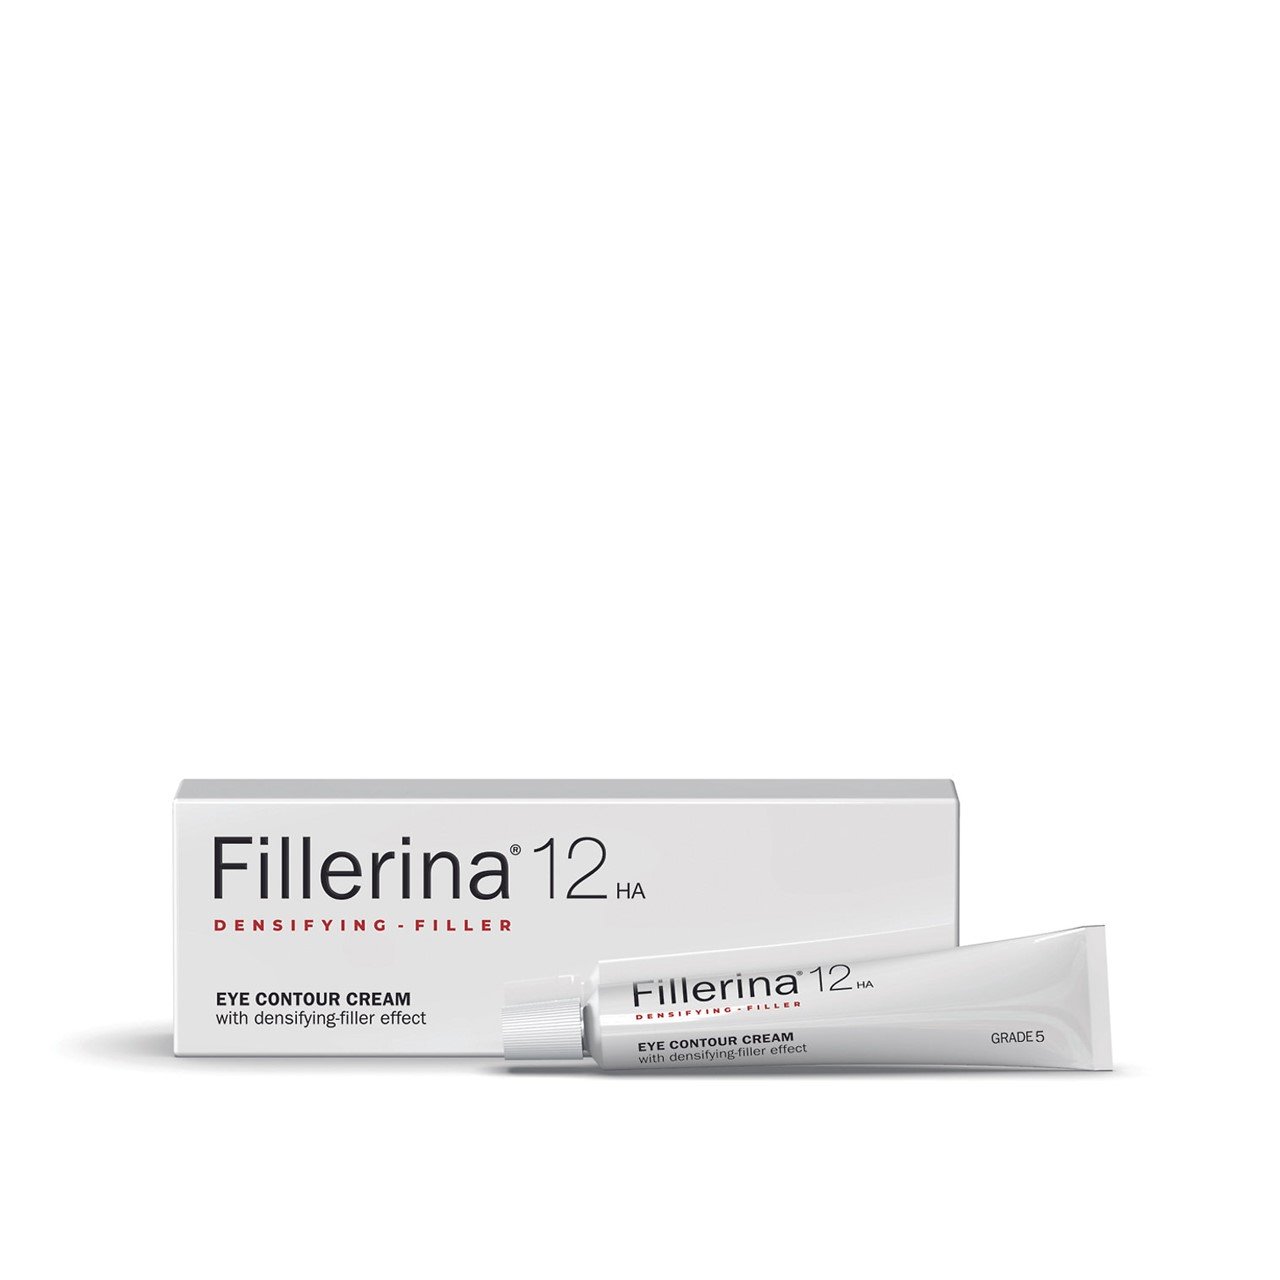 Fillerina 12HA Densifying-Filler Eye Contour Cream Grade 5 15ml (0.51fl oz)